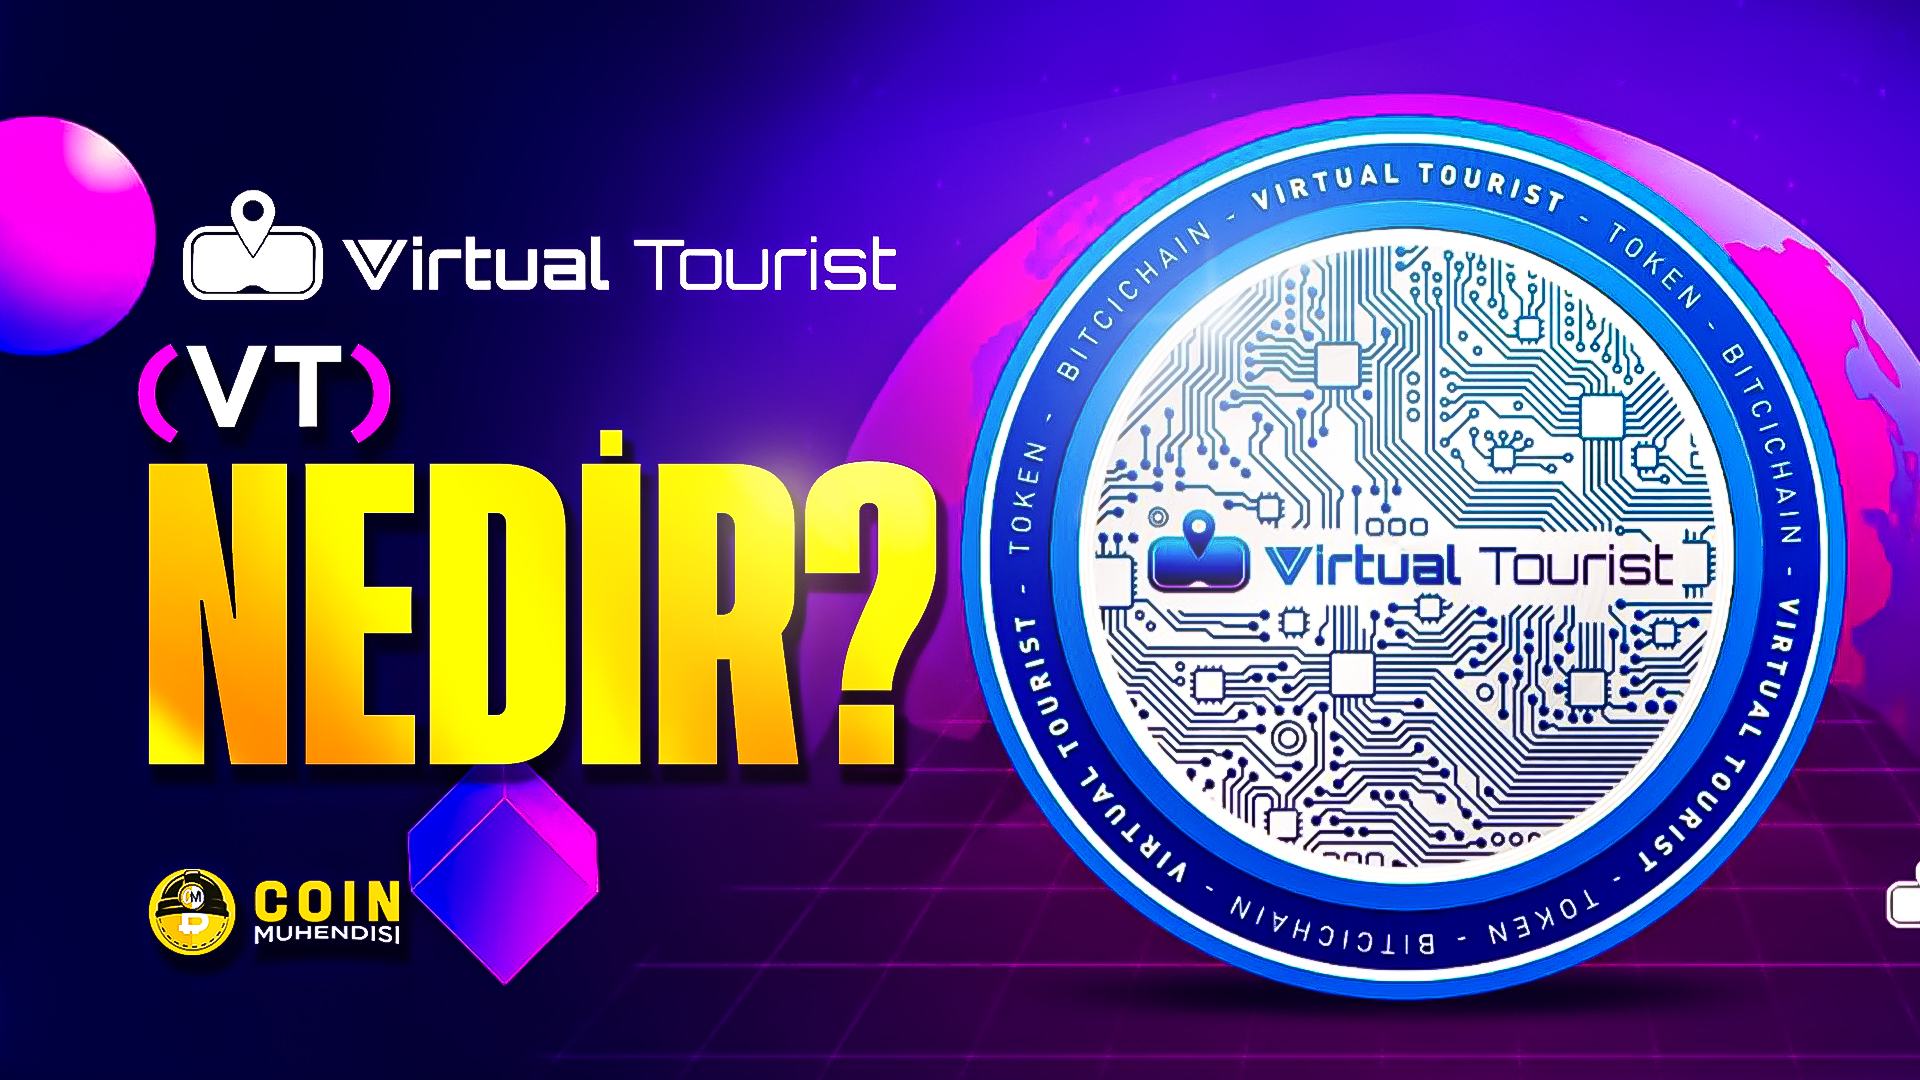 Virtual Tourist VT Nedir